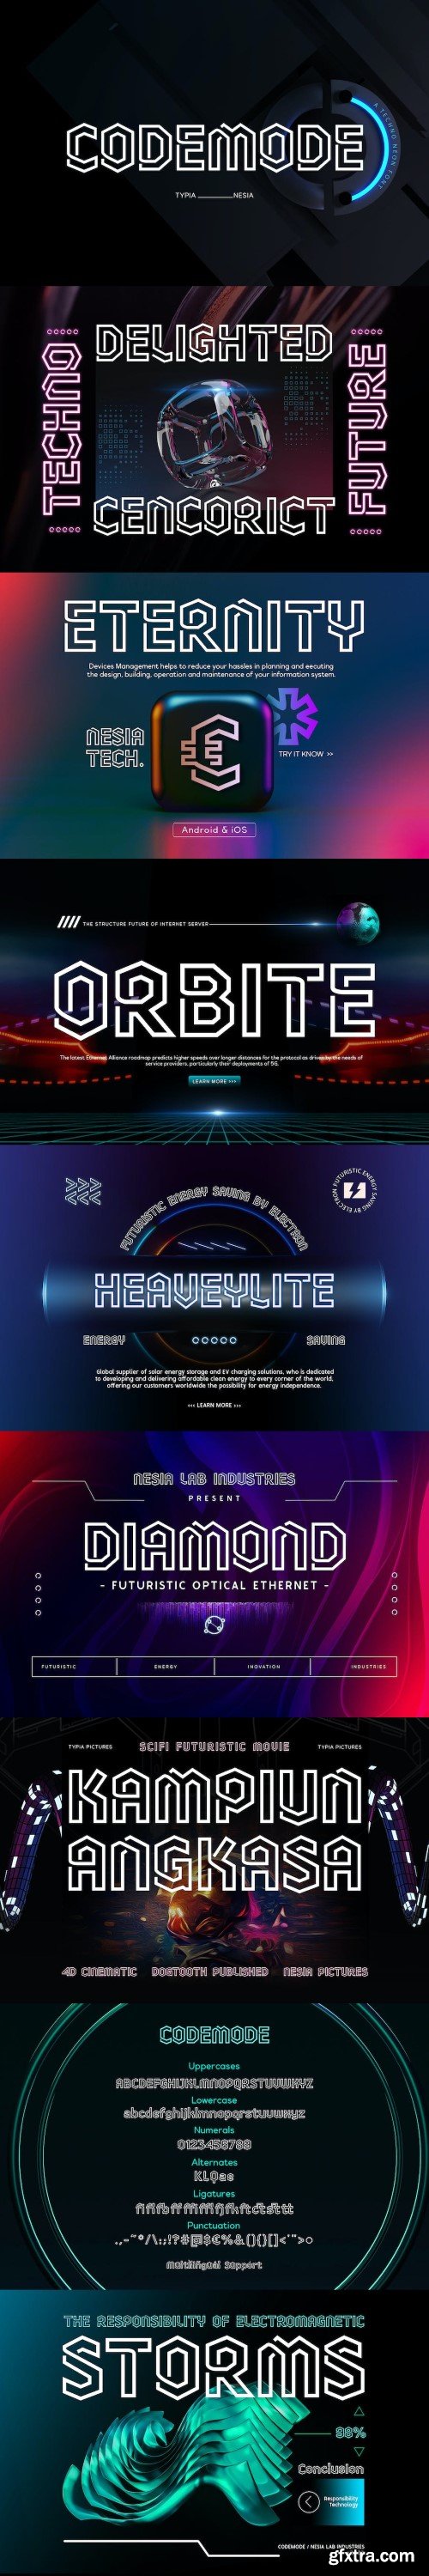 Codemode - Hexagonal Techno Scifi Neon Font